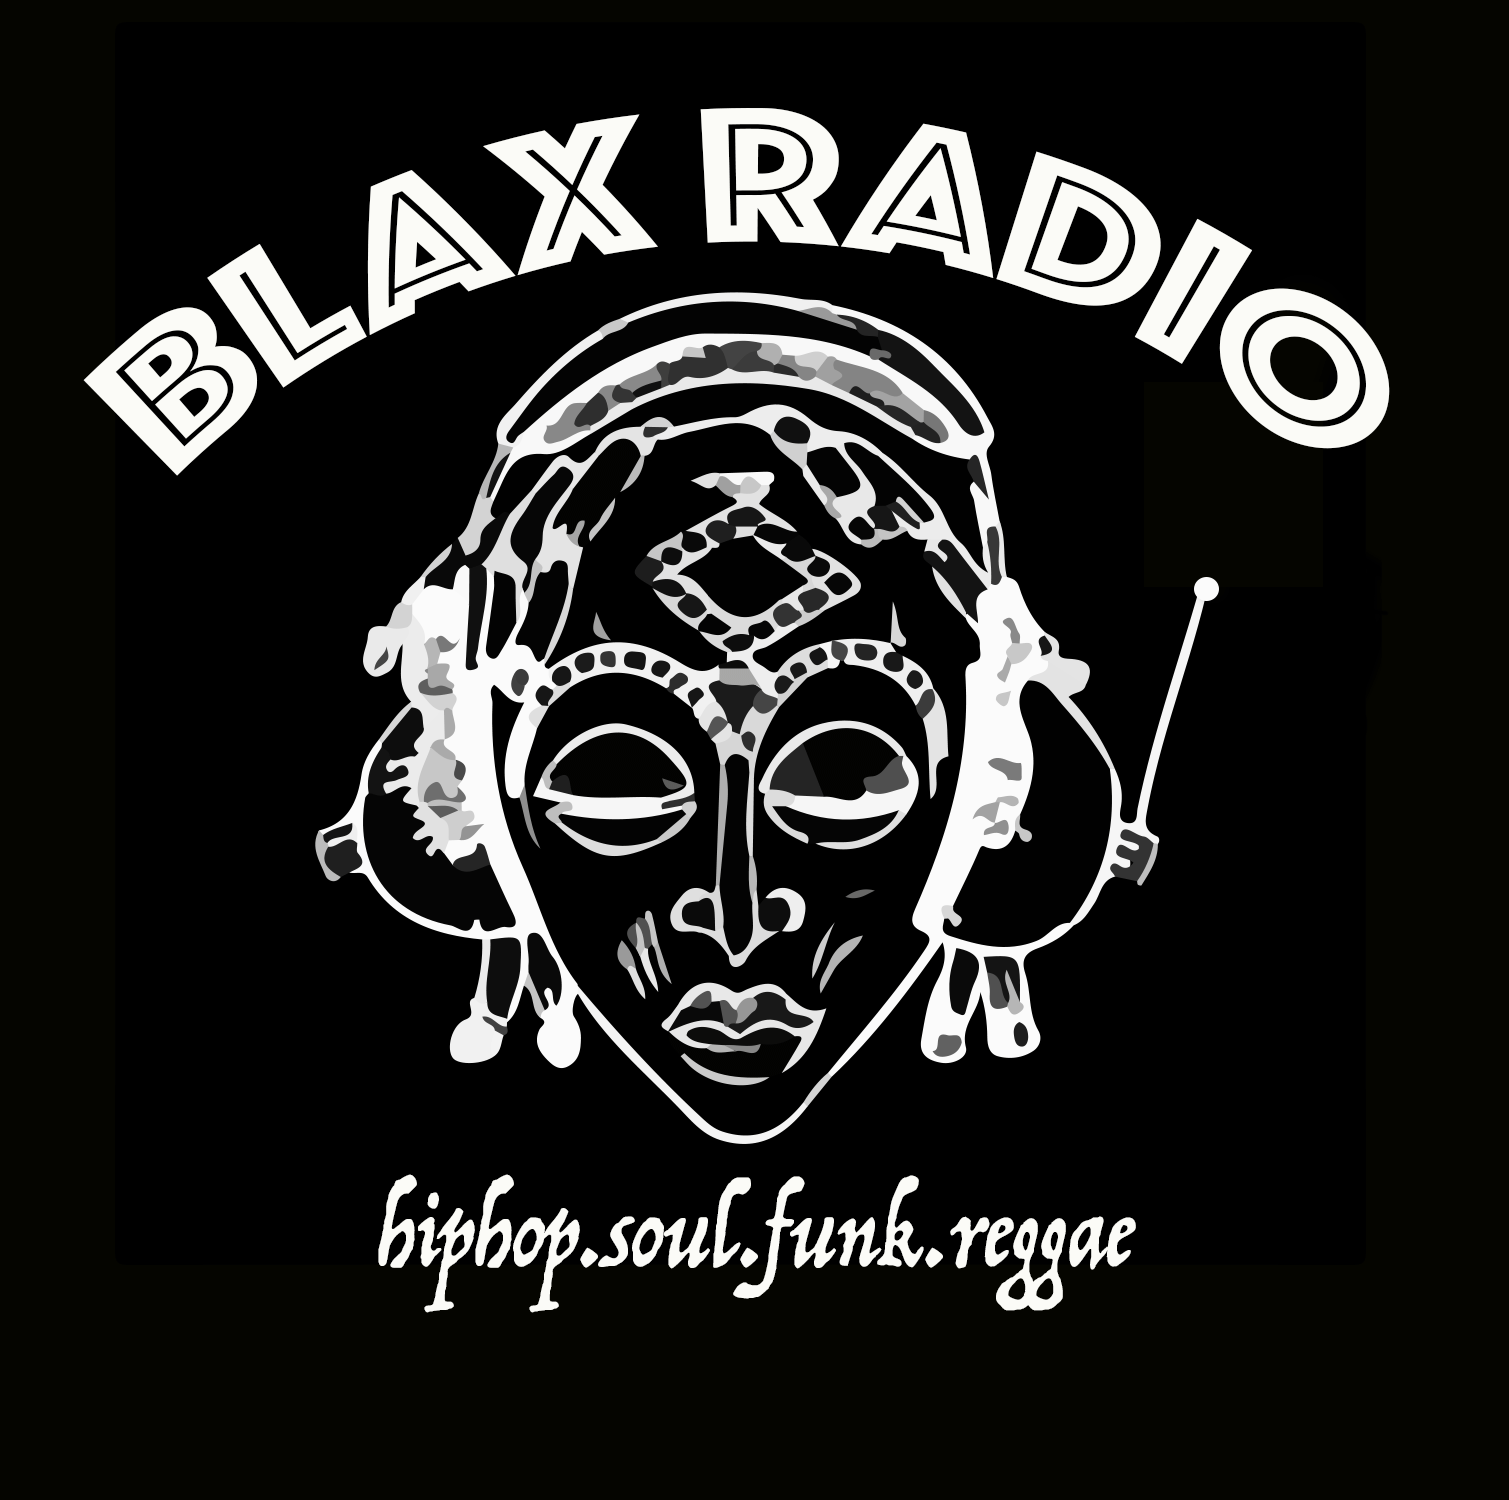 Art for Blax Radio Favorite1 by Rage Souljah